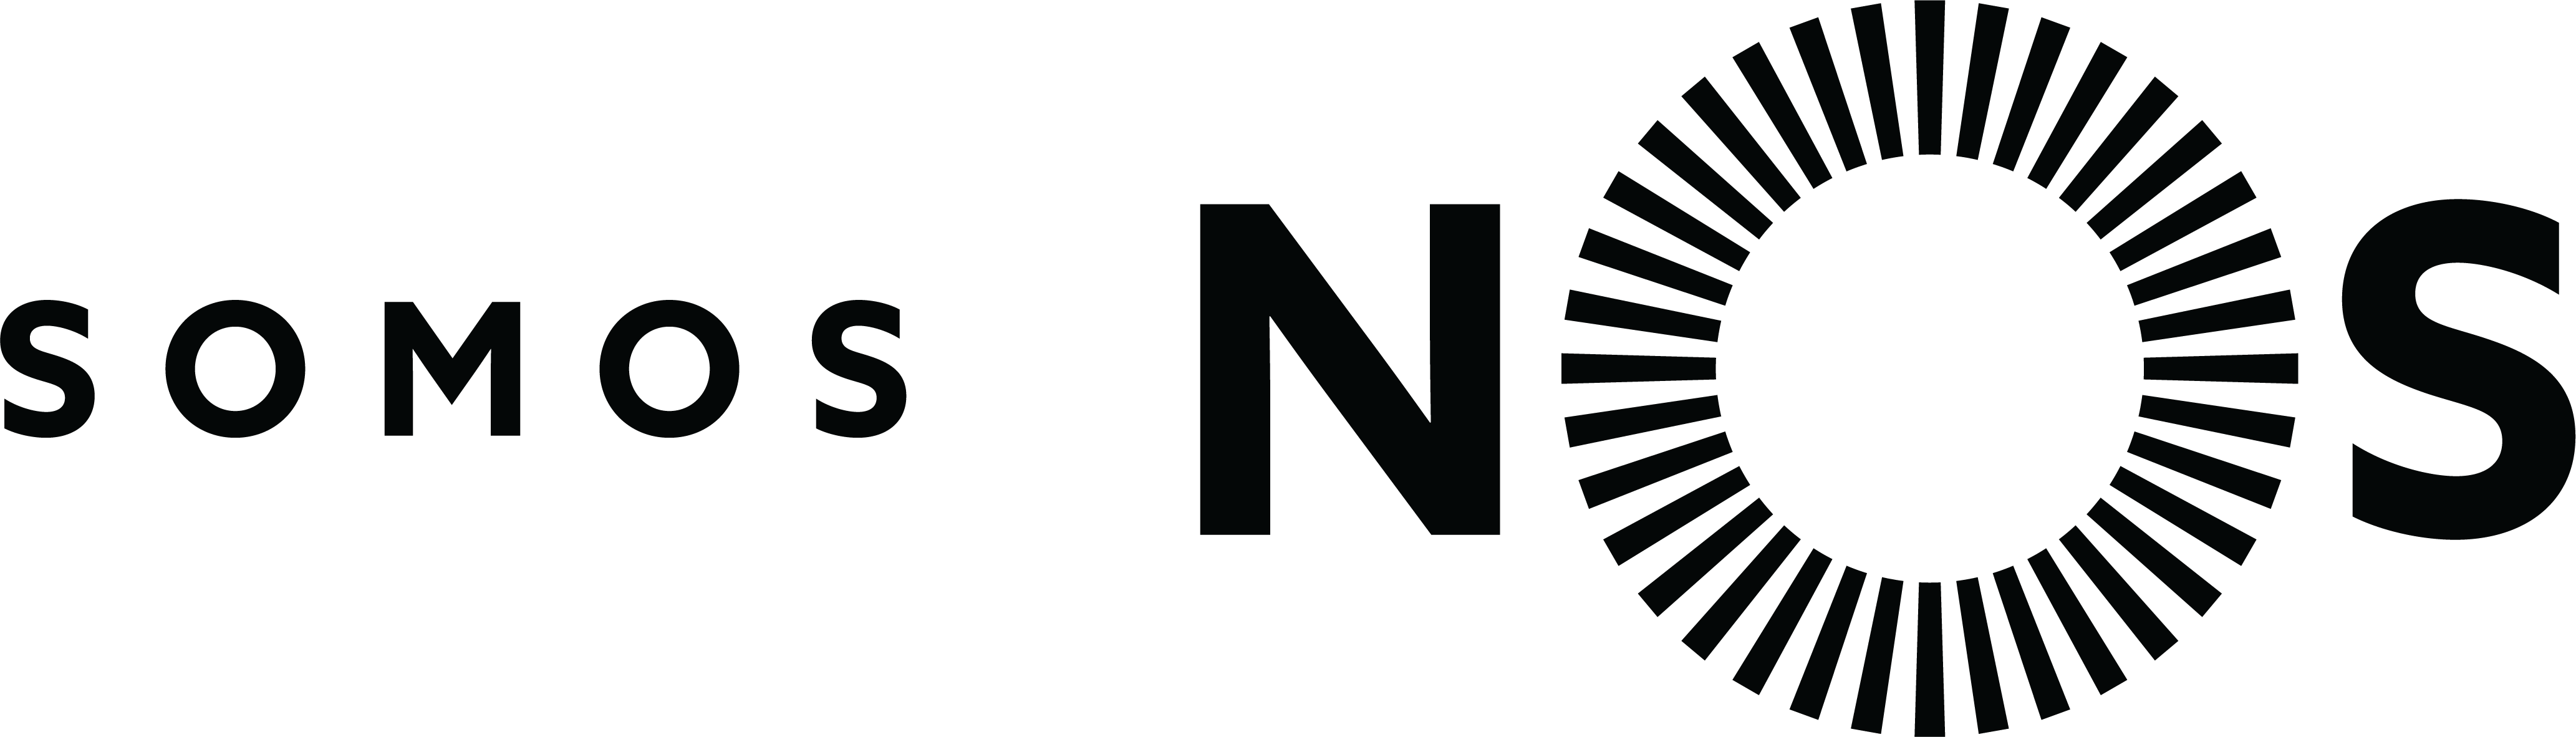 organization-logo